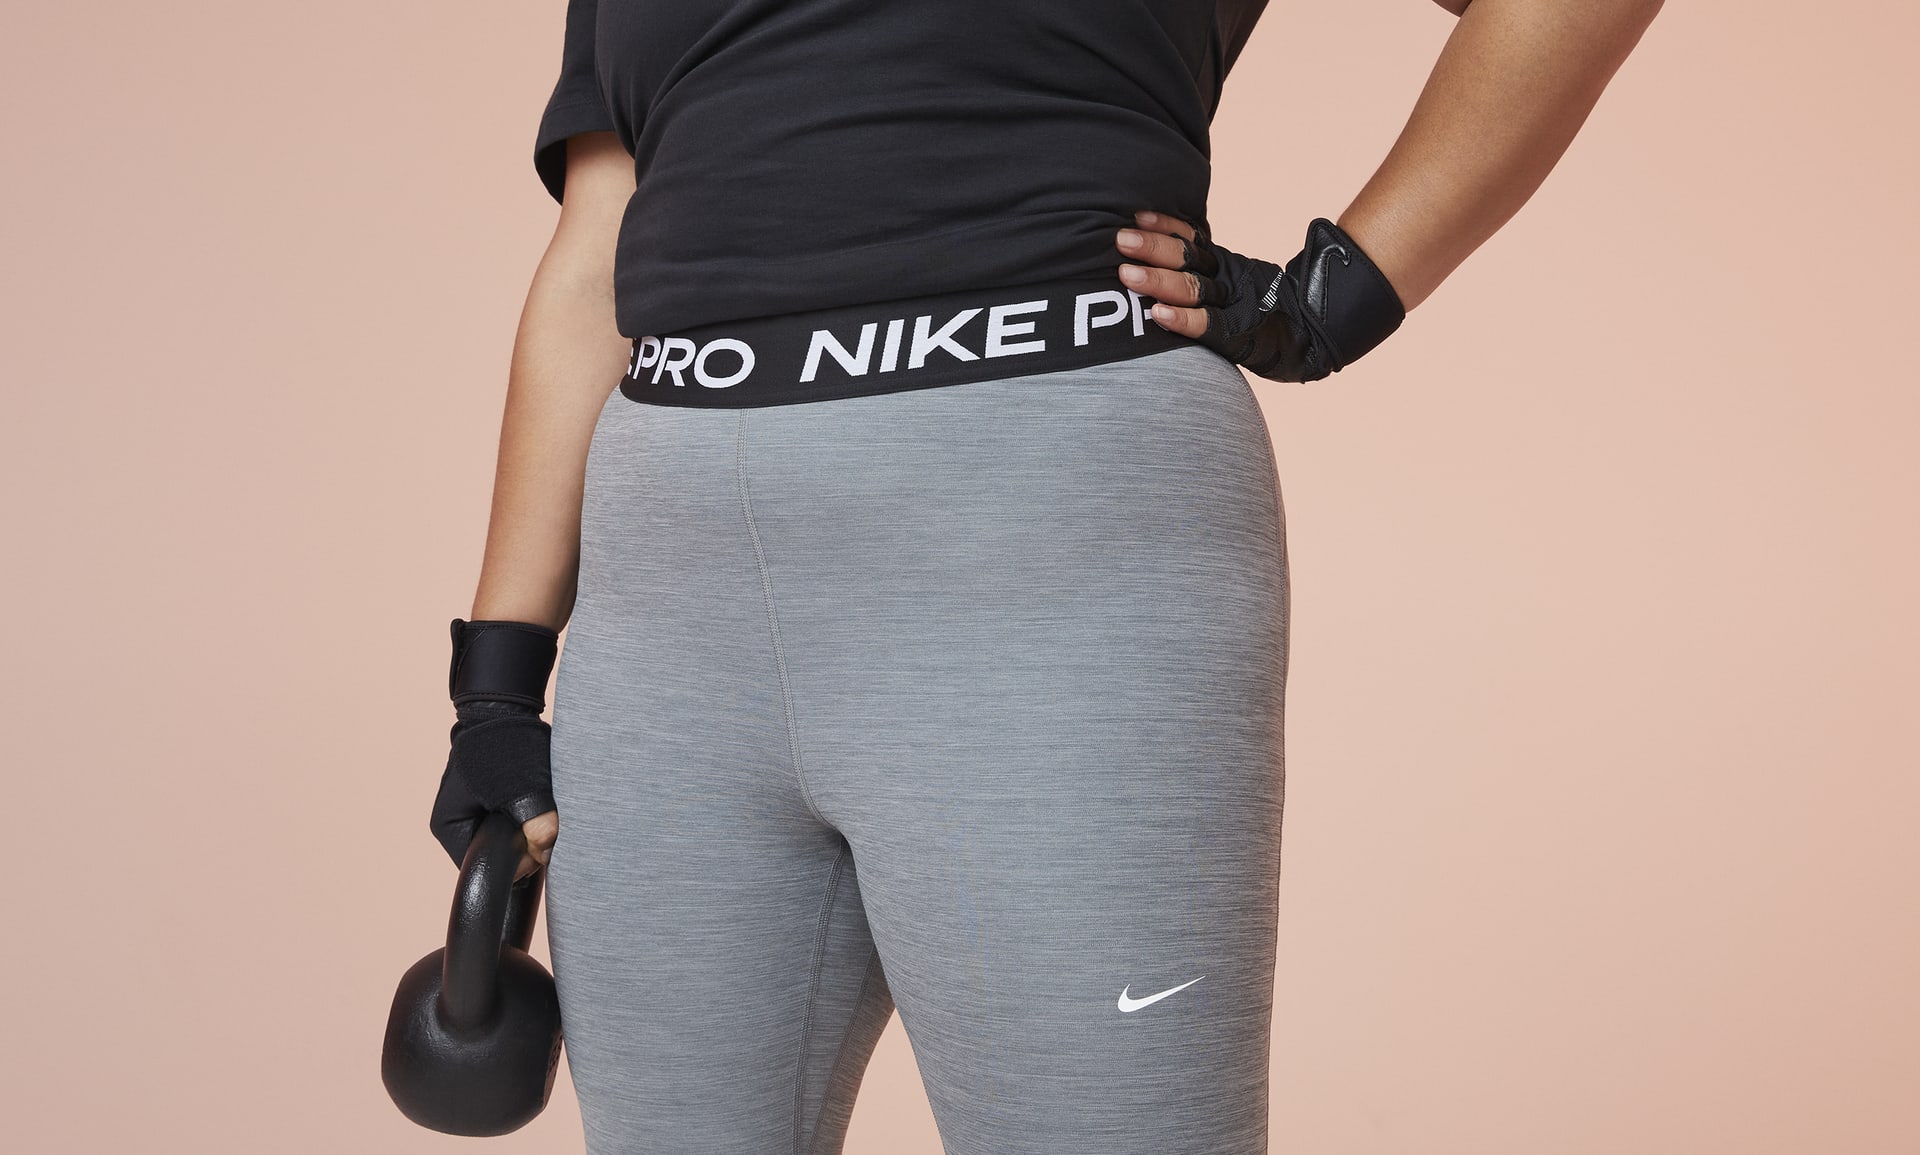 Nike Women's Pro 365 Leggings-Plus Size - Hibbett